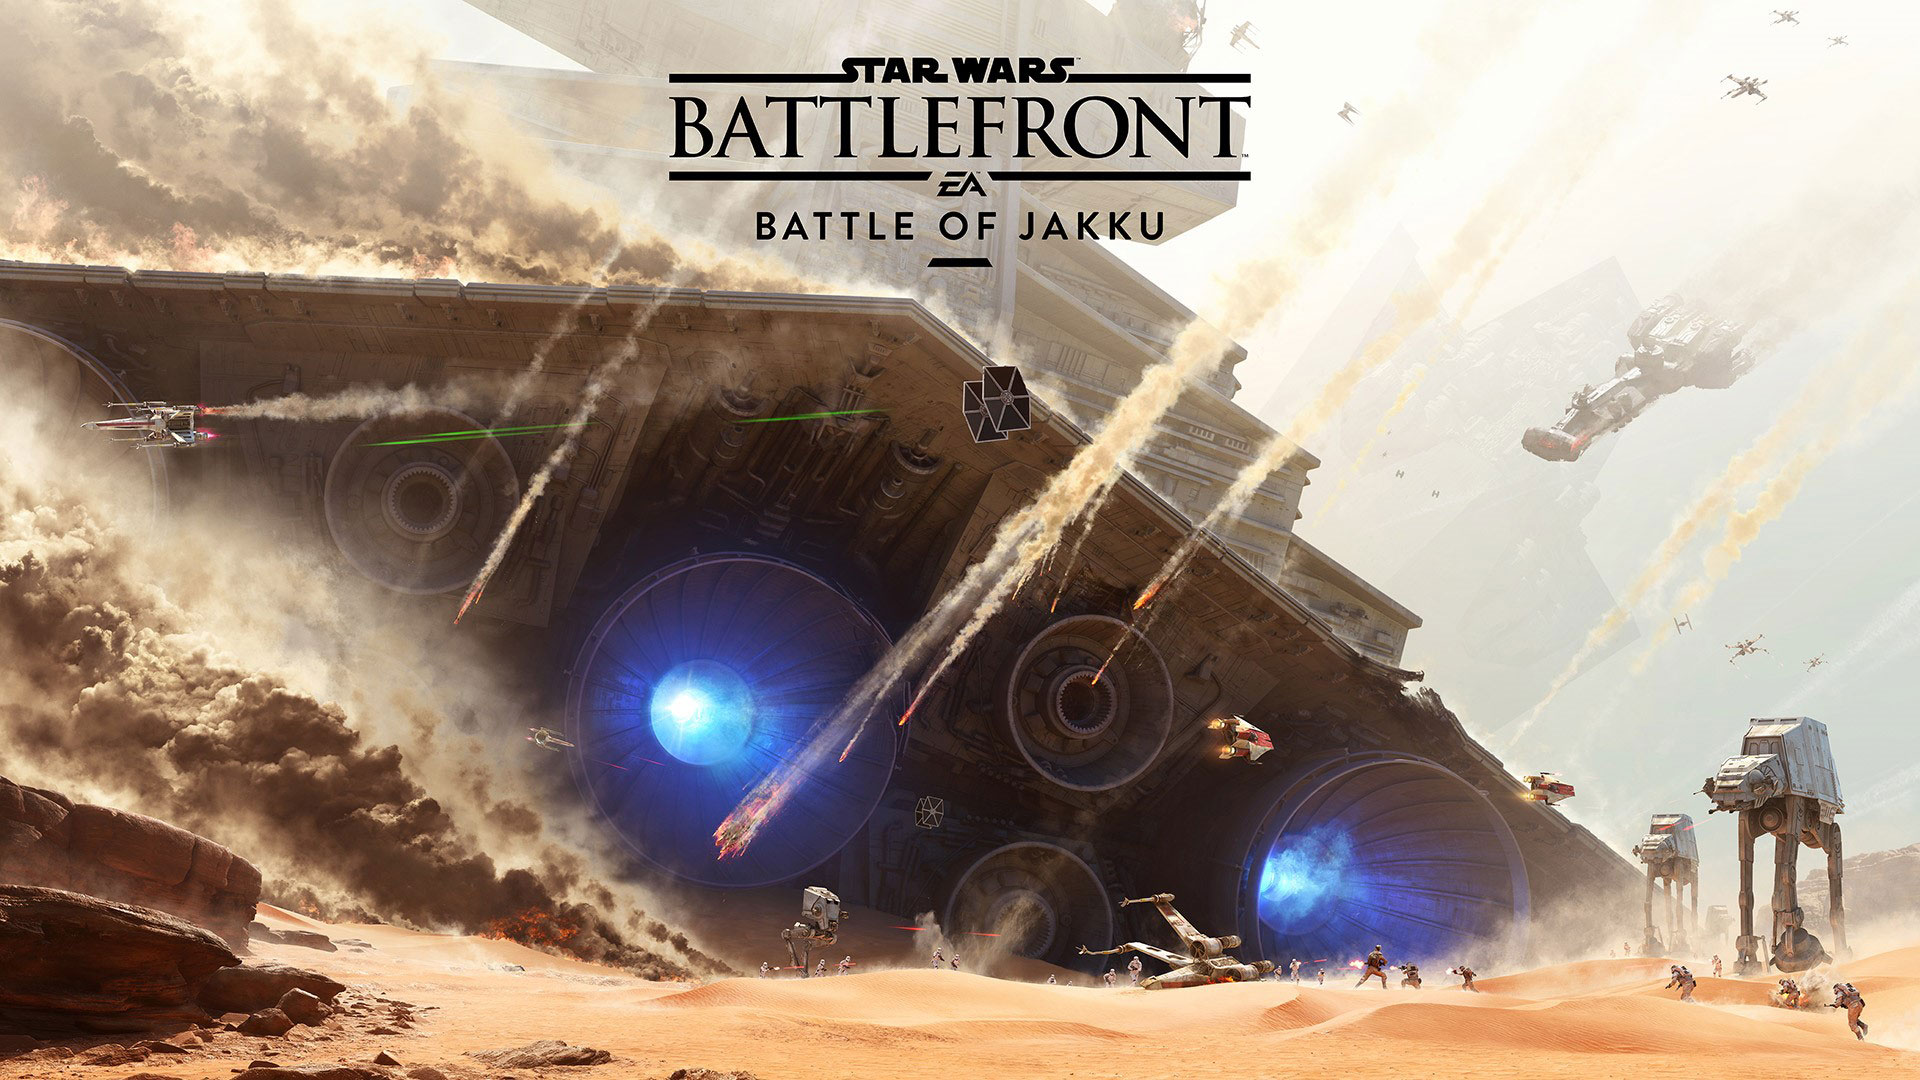 Star Wars Battlefront - Coming November 17th